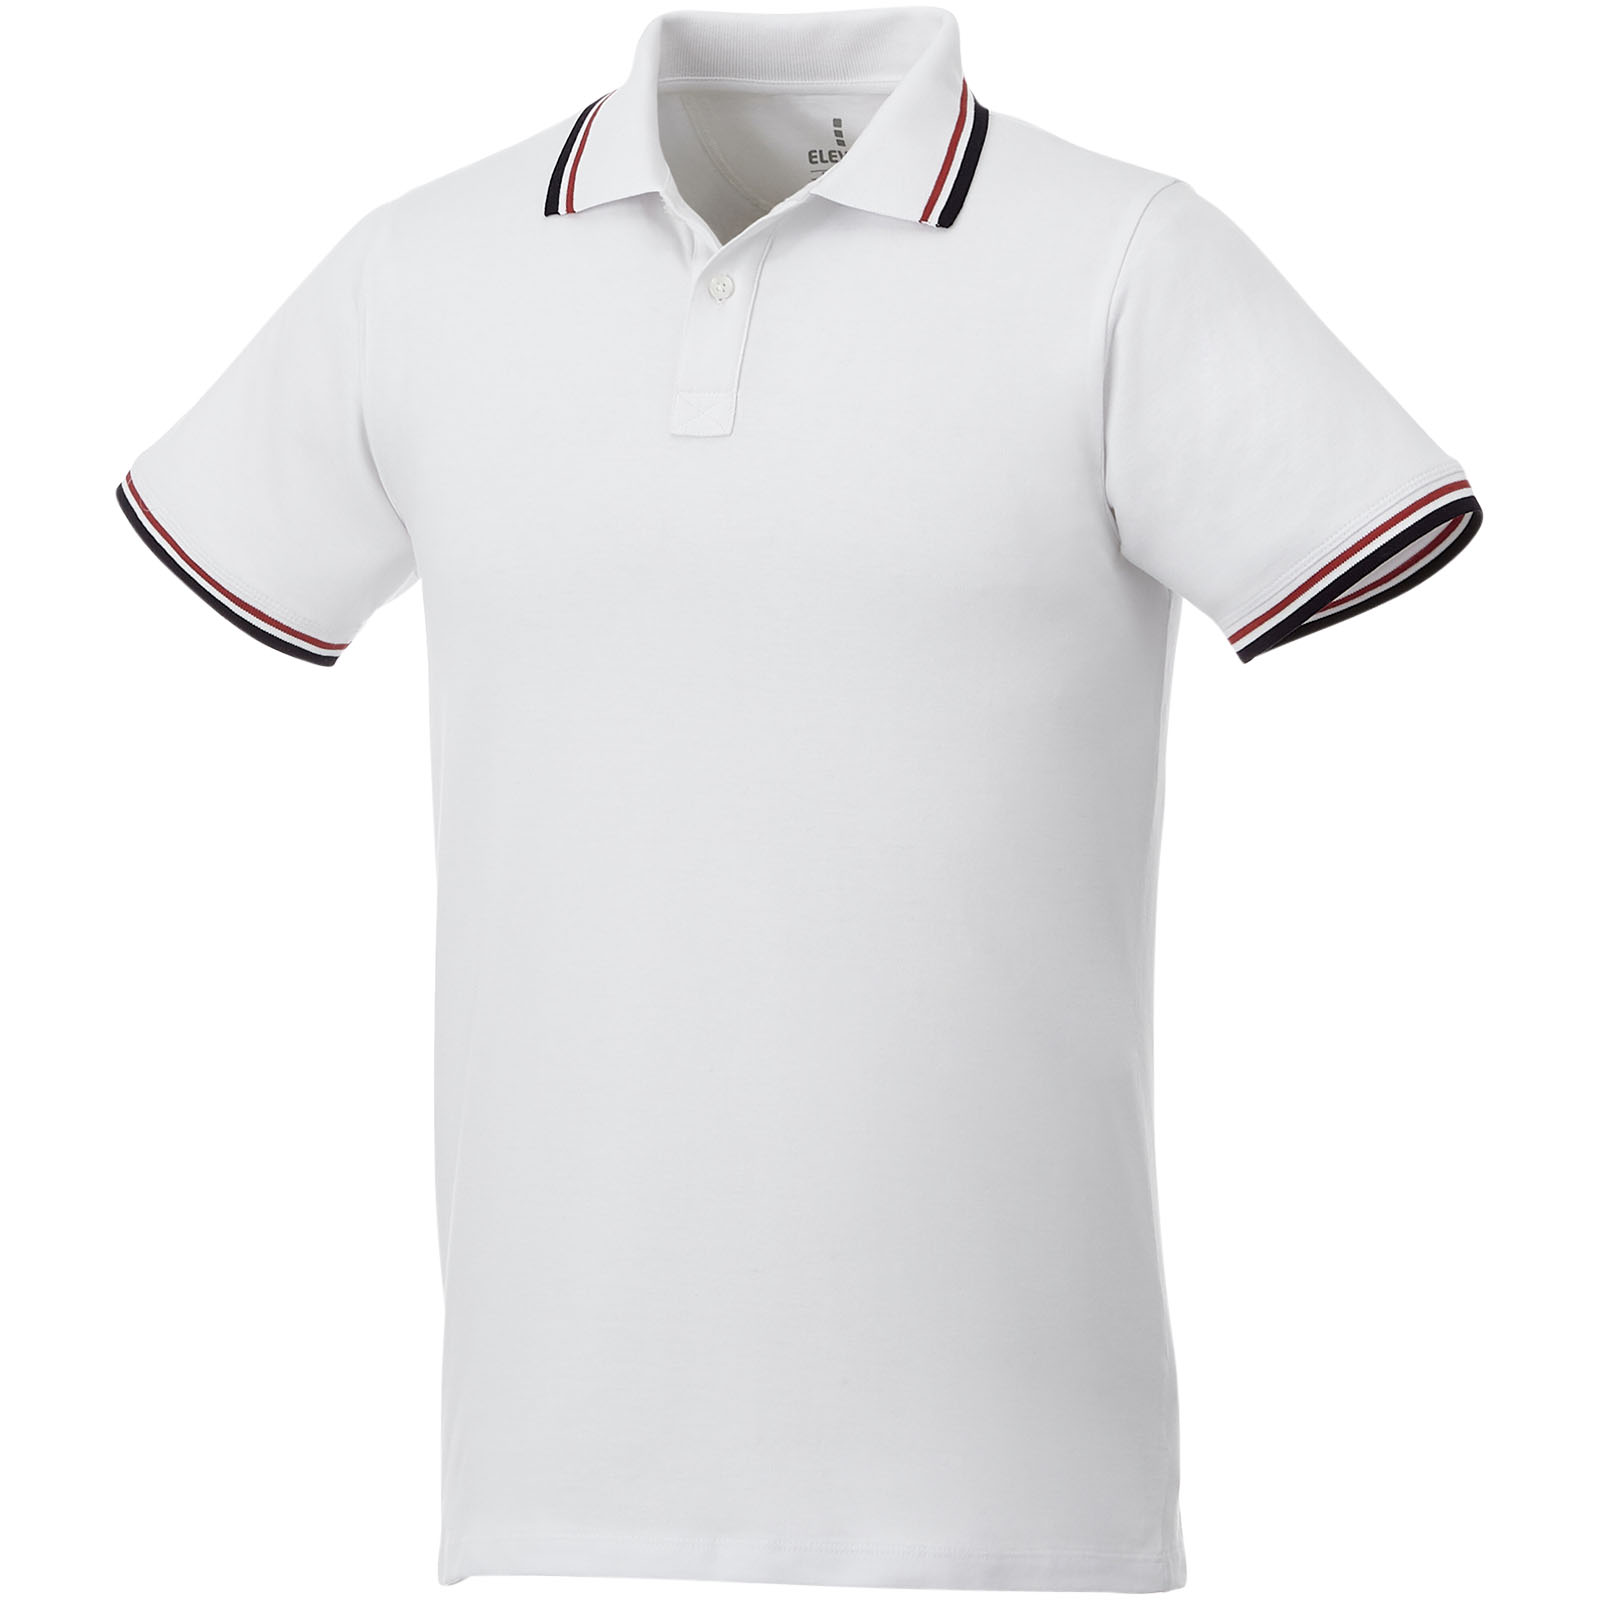 Contrast Polo Shirt - Thornwood - Old Sodbury